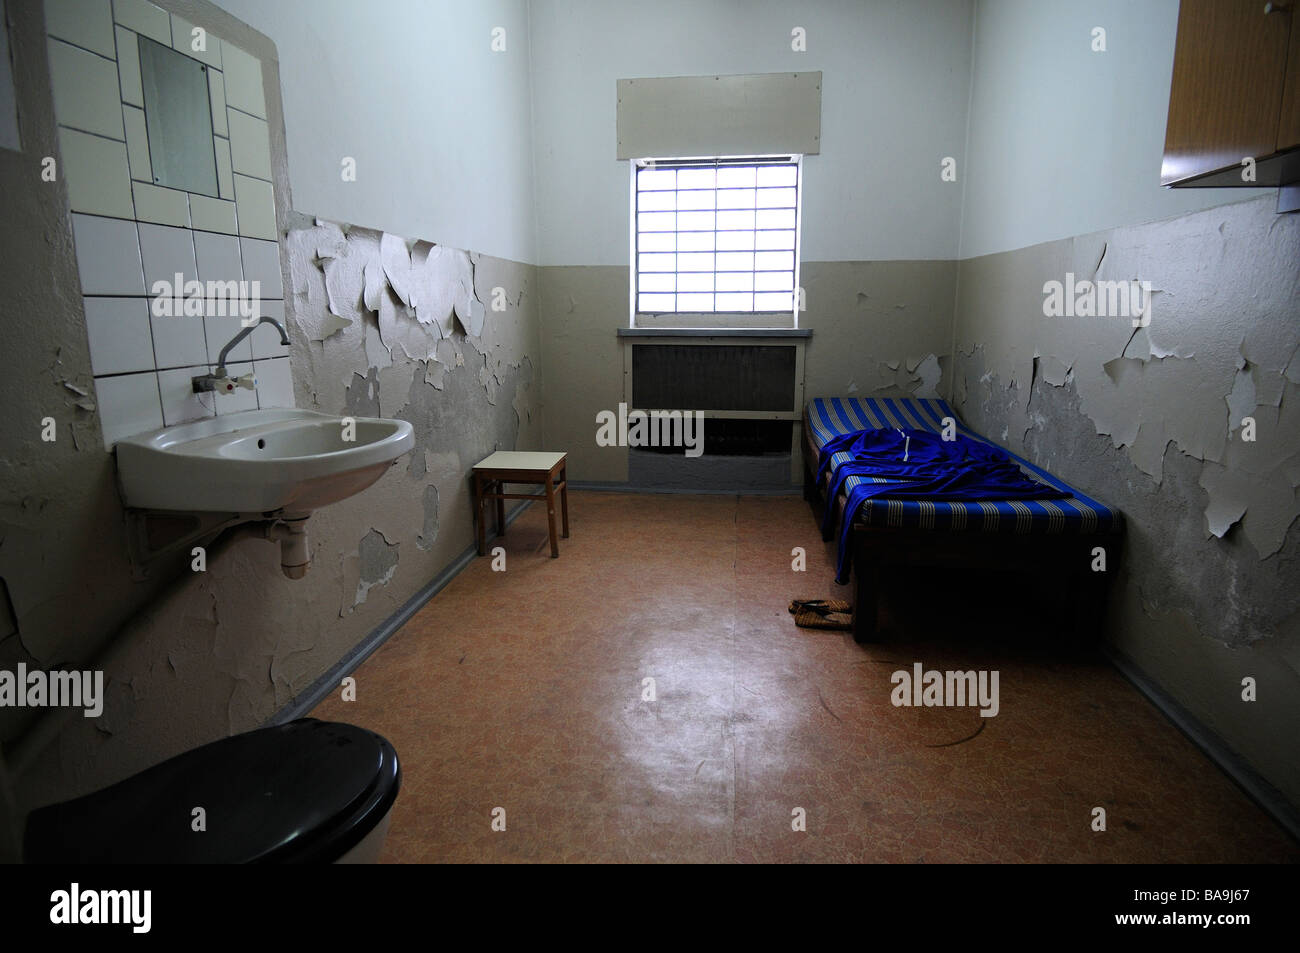 American Prison Cell